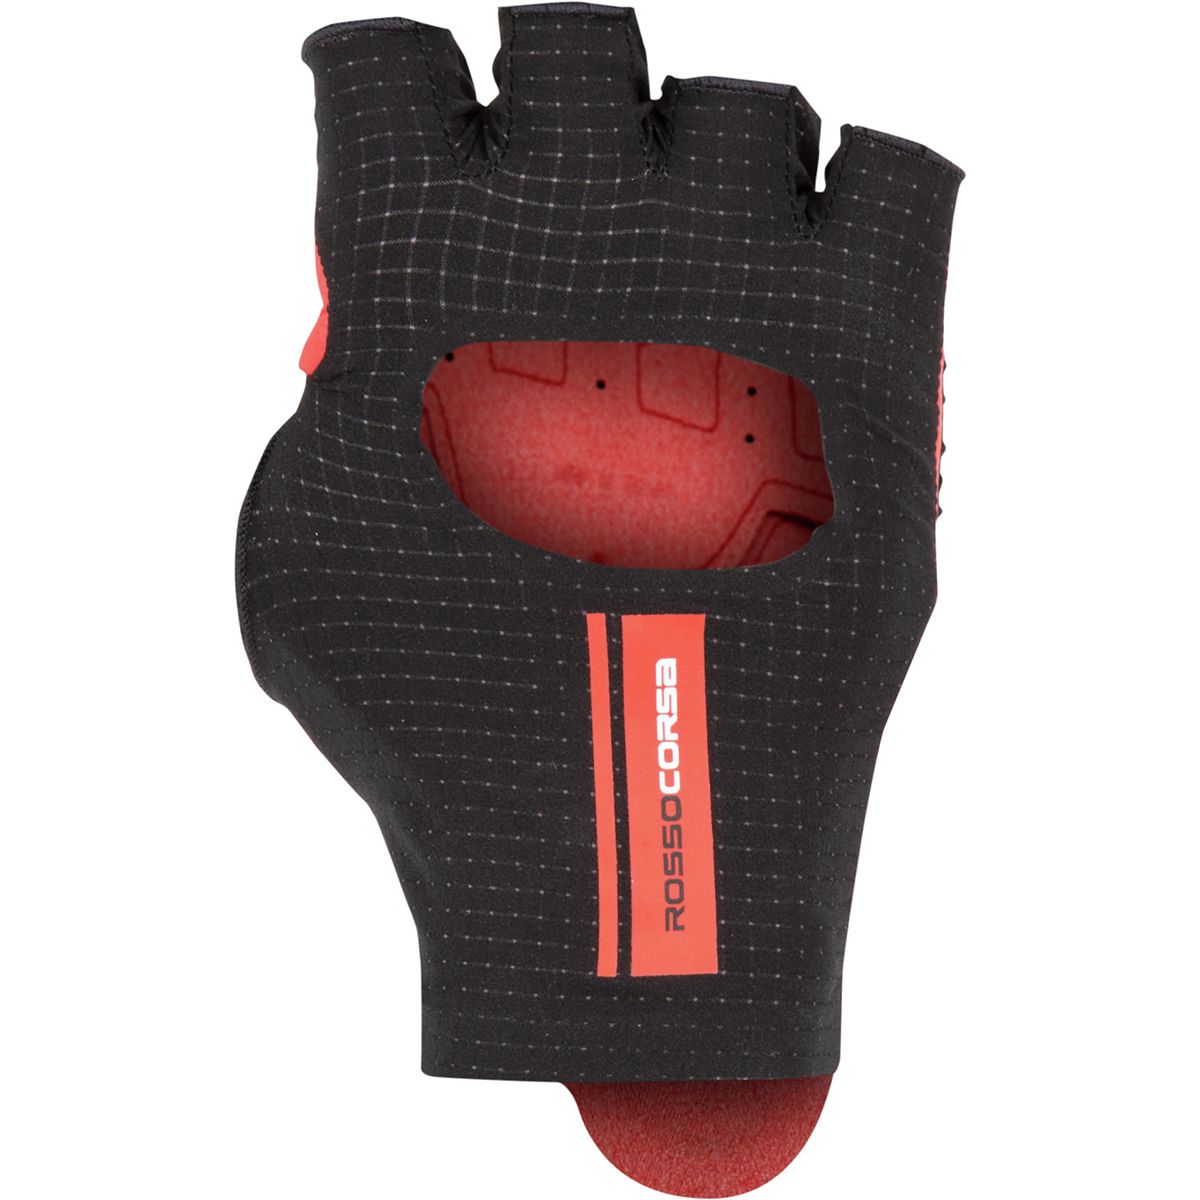 Castelli Cabrio Glove - Men's